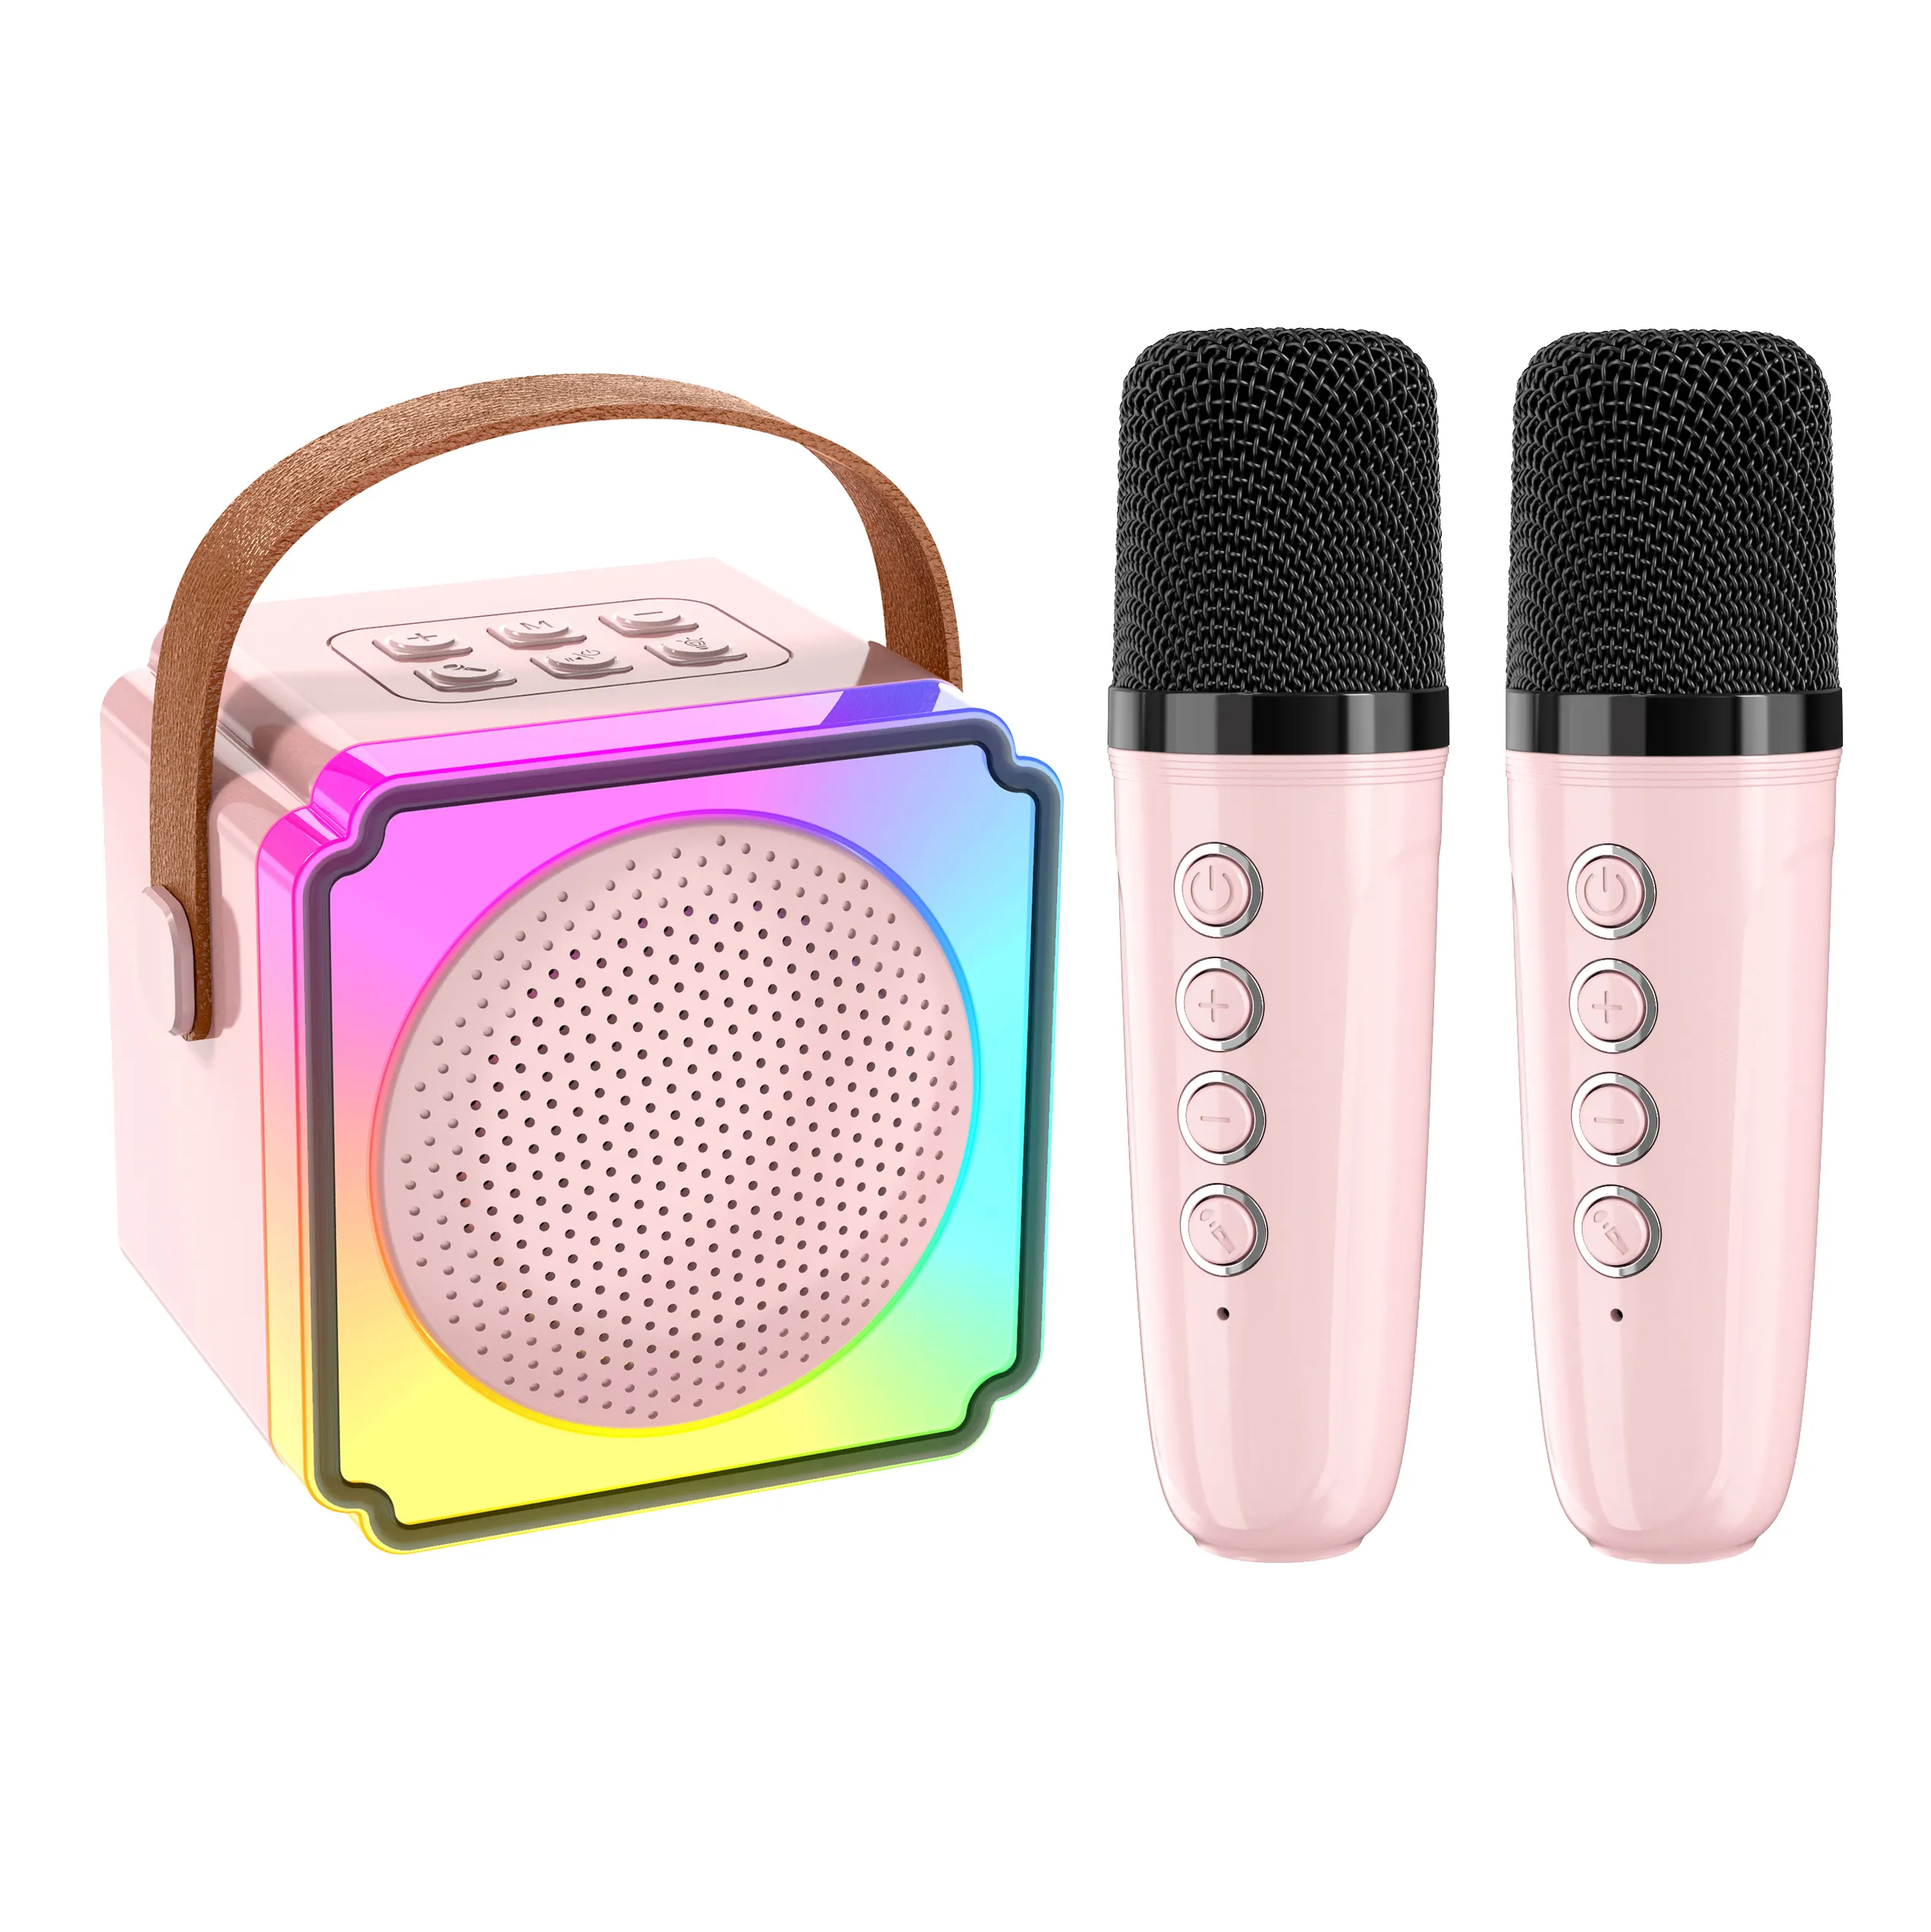 Karaoke portabel mikrofon mini musik mobile bluetooth keras kotak speaker lirik bluetooth Portable Portable Portable wireless desain yang unik